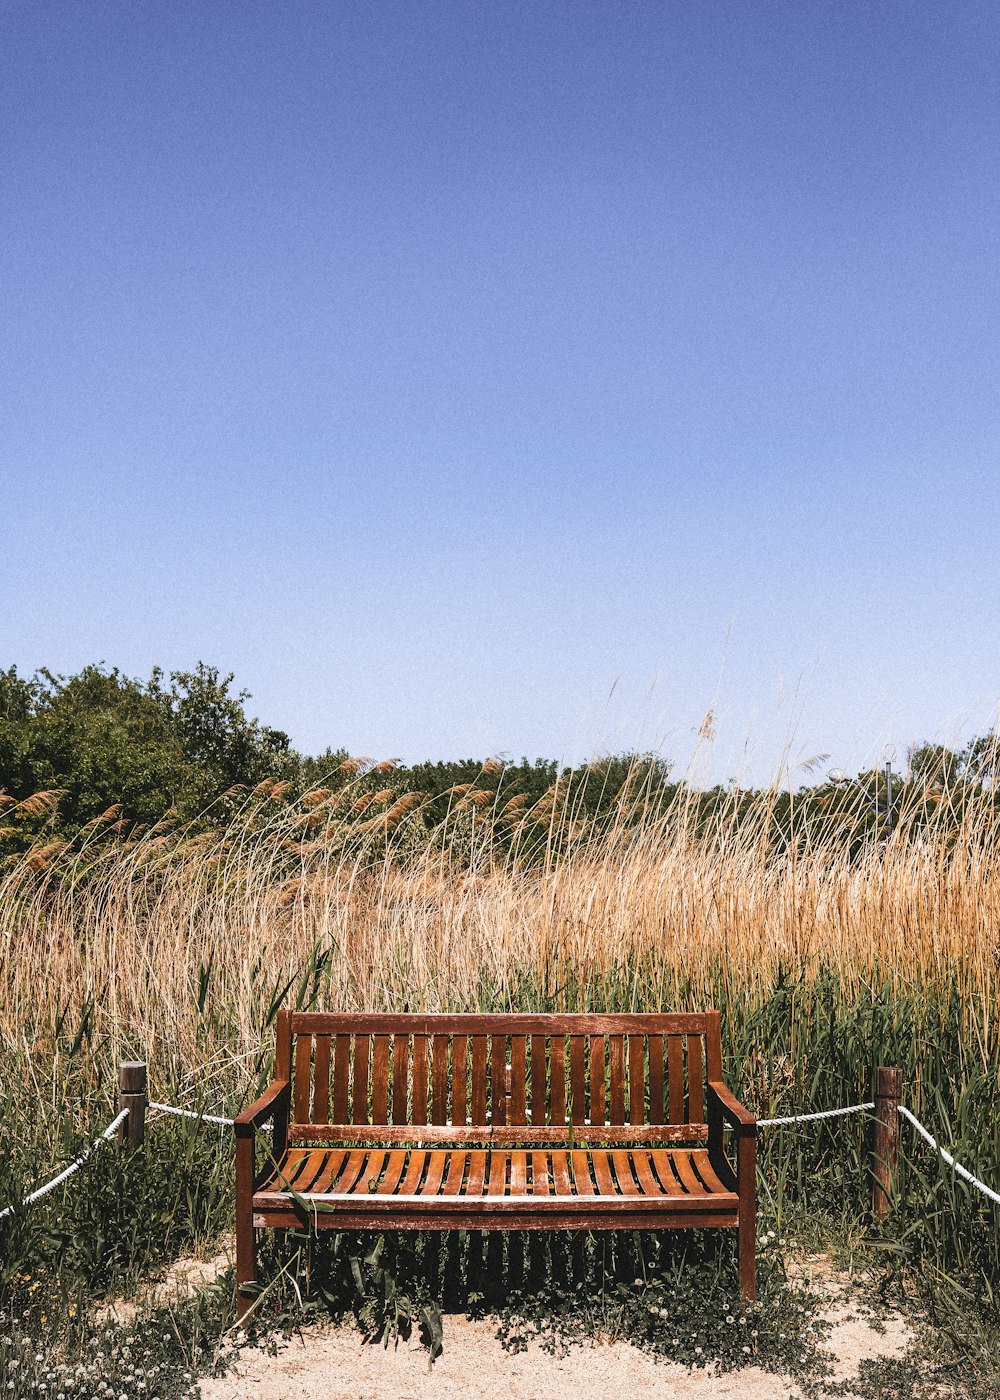 brown wooden bench on brown grass field under blue sky during daytime